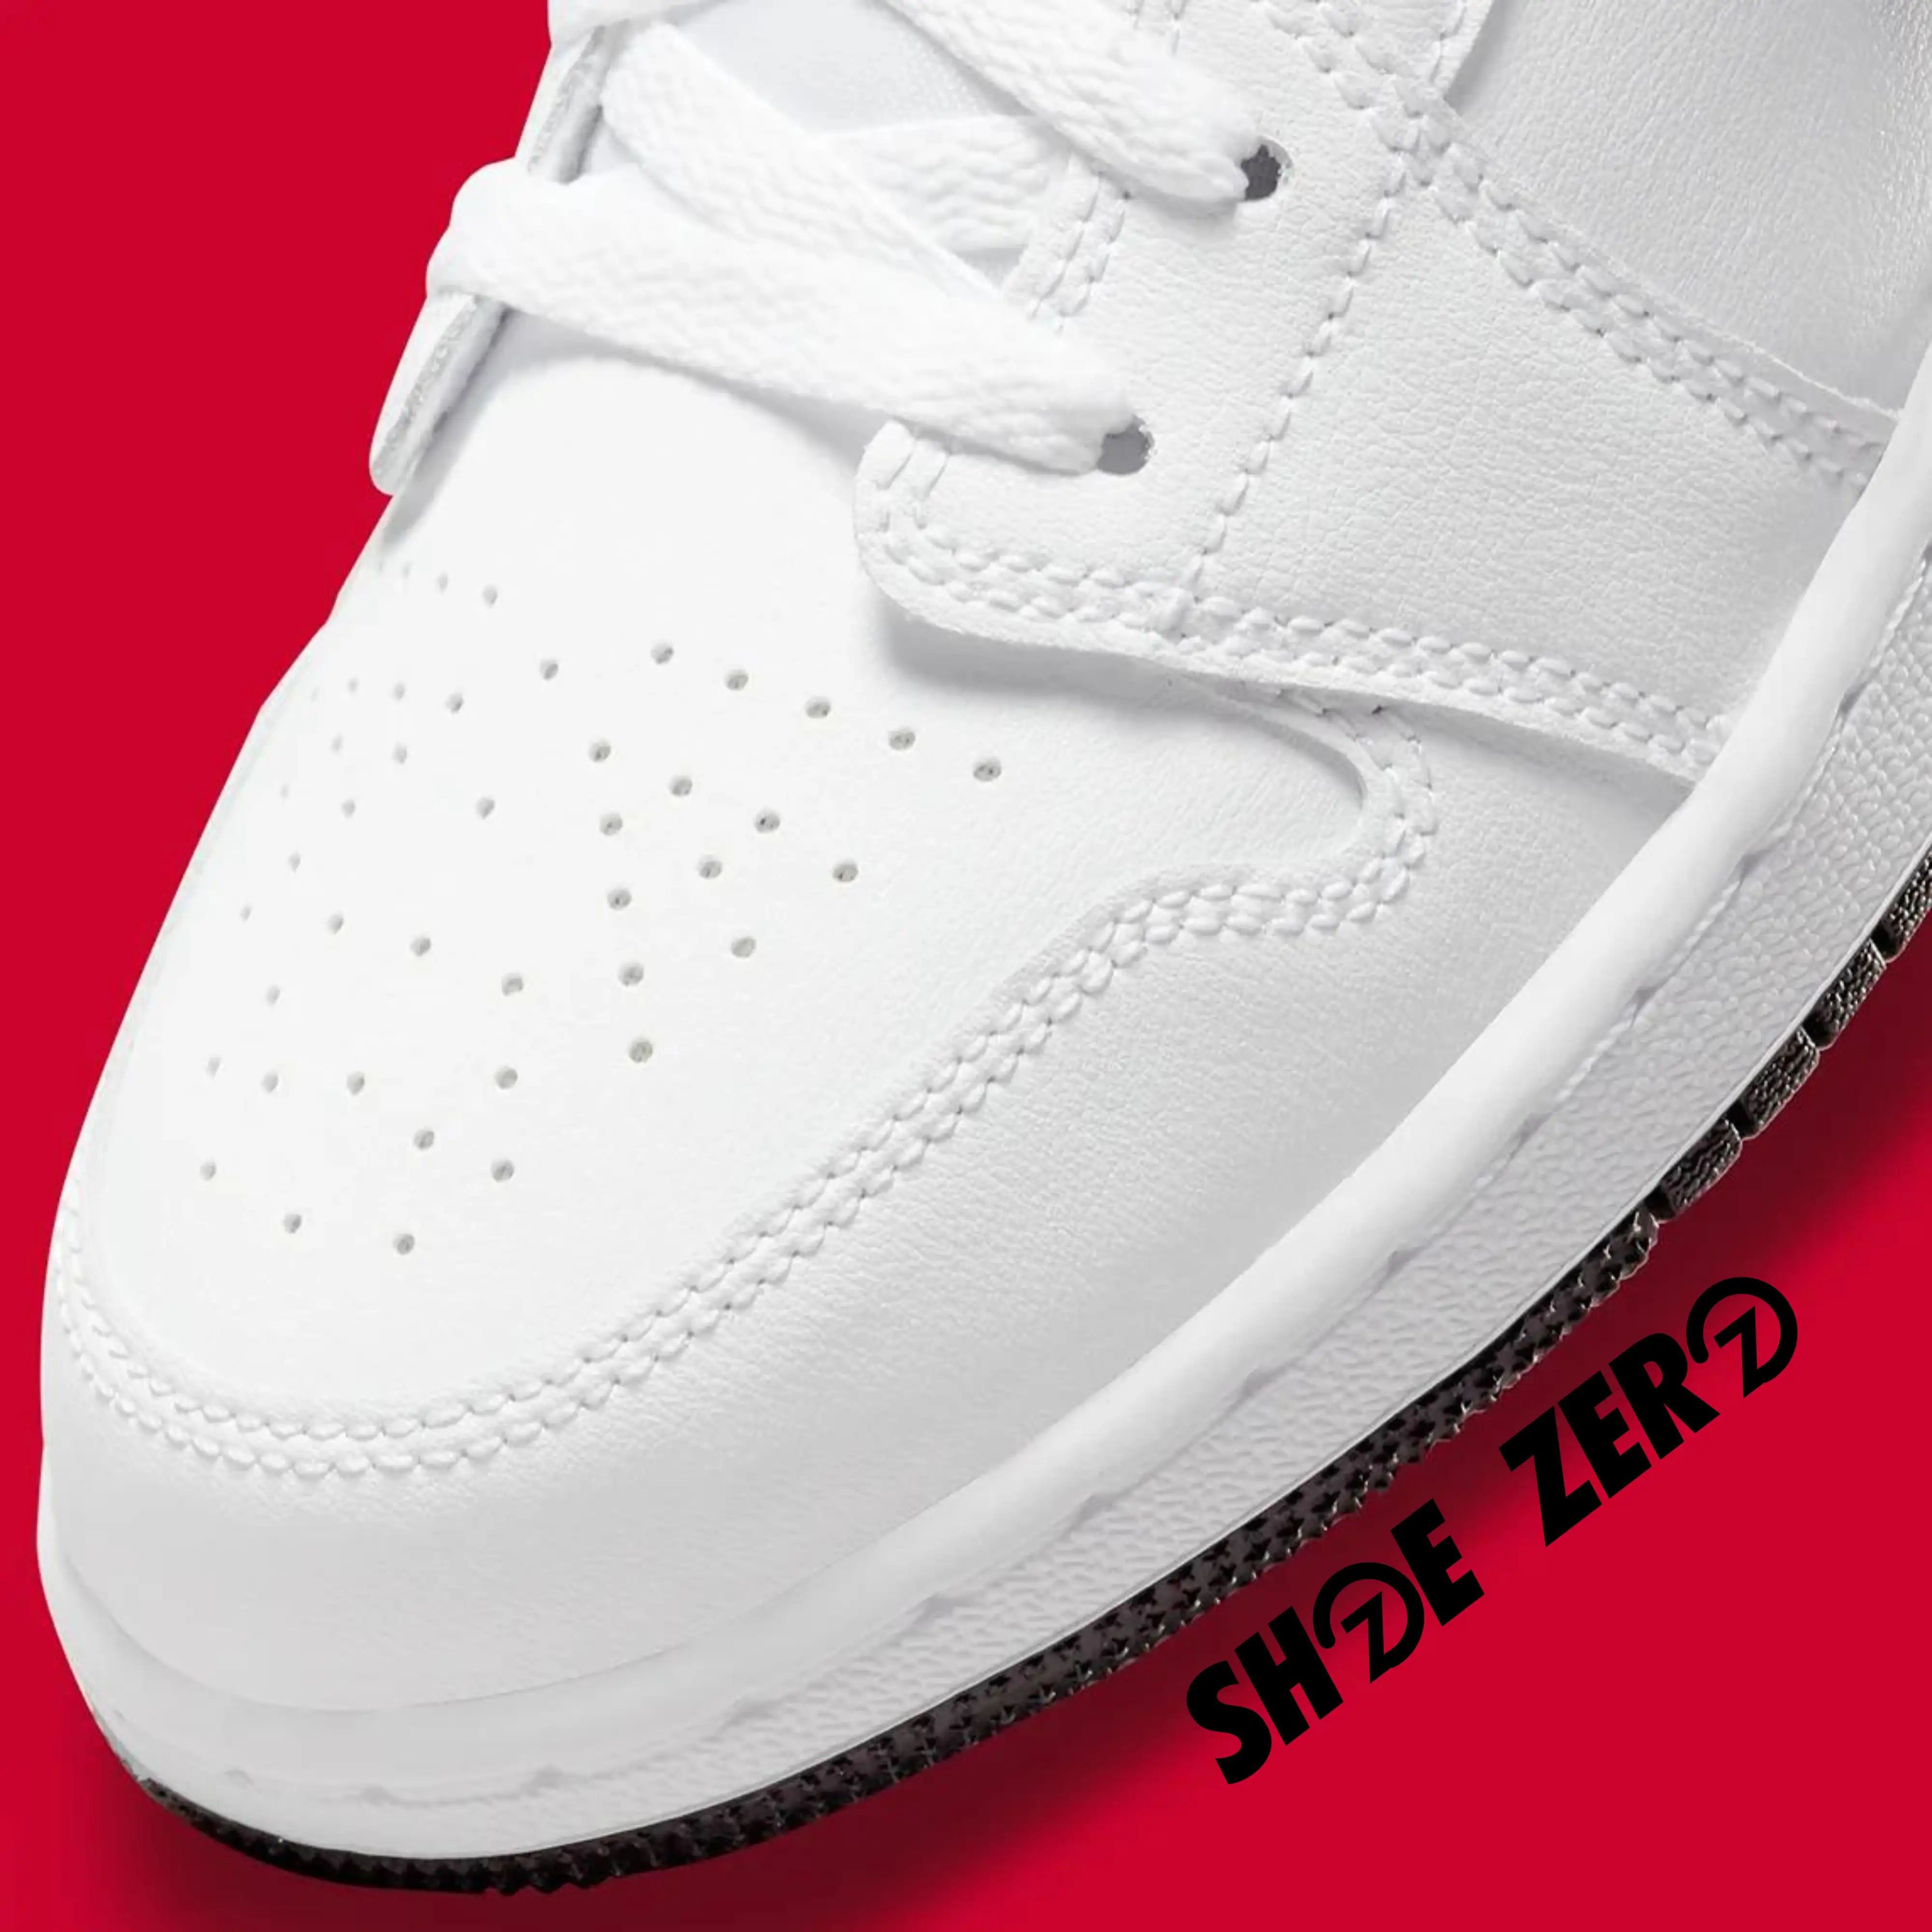 Customizable Premium High Top Leather Sneakers (White) | Design your own | Shoe Zero